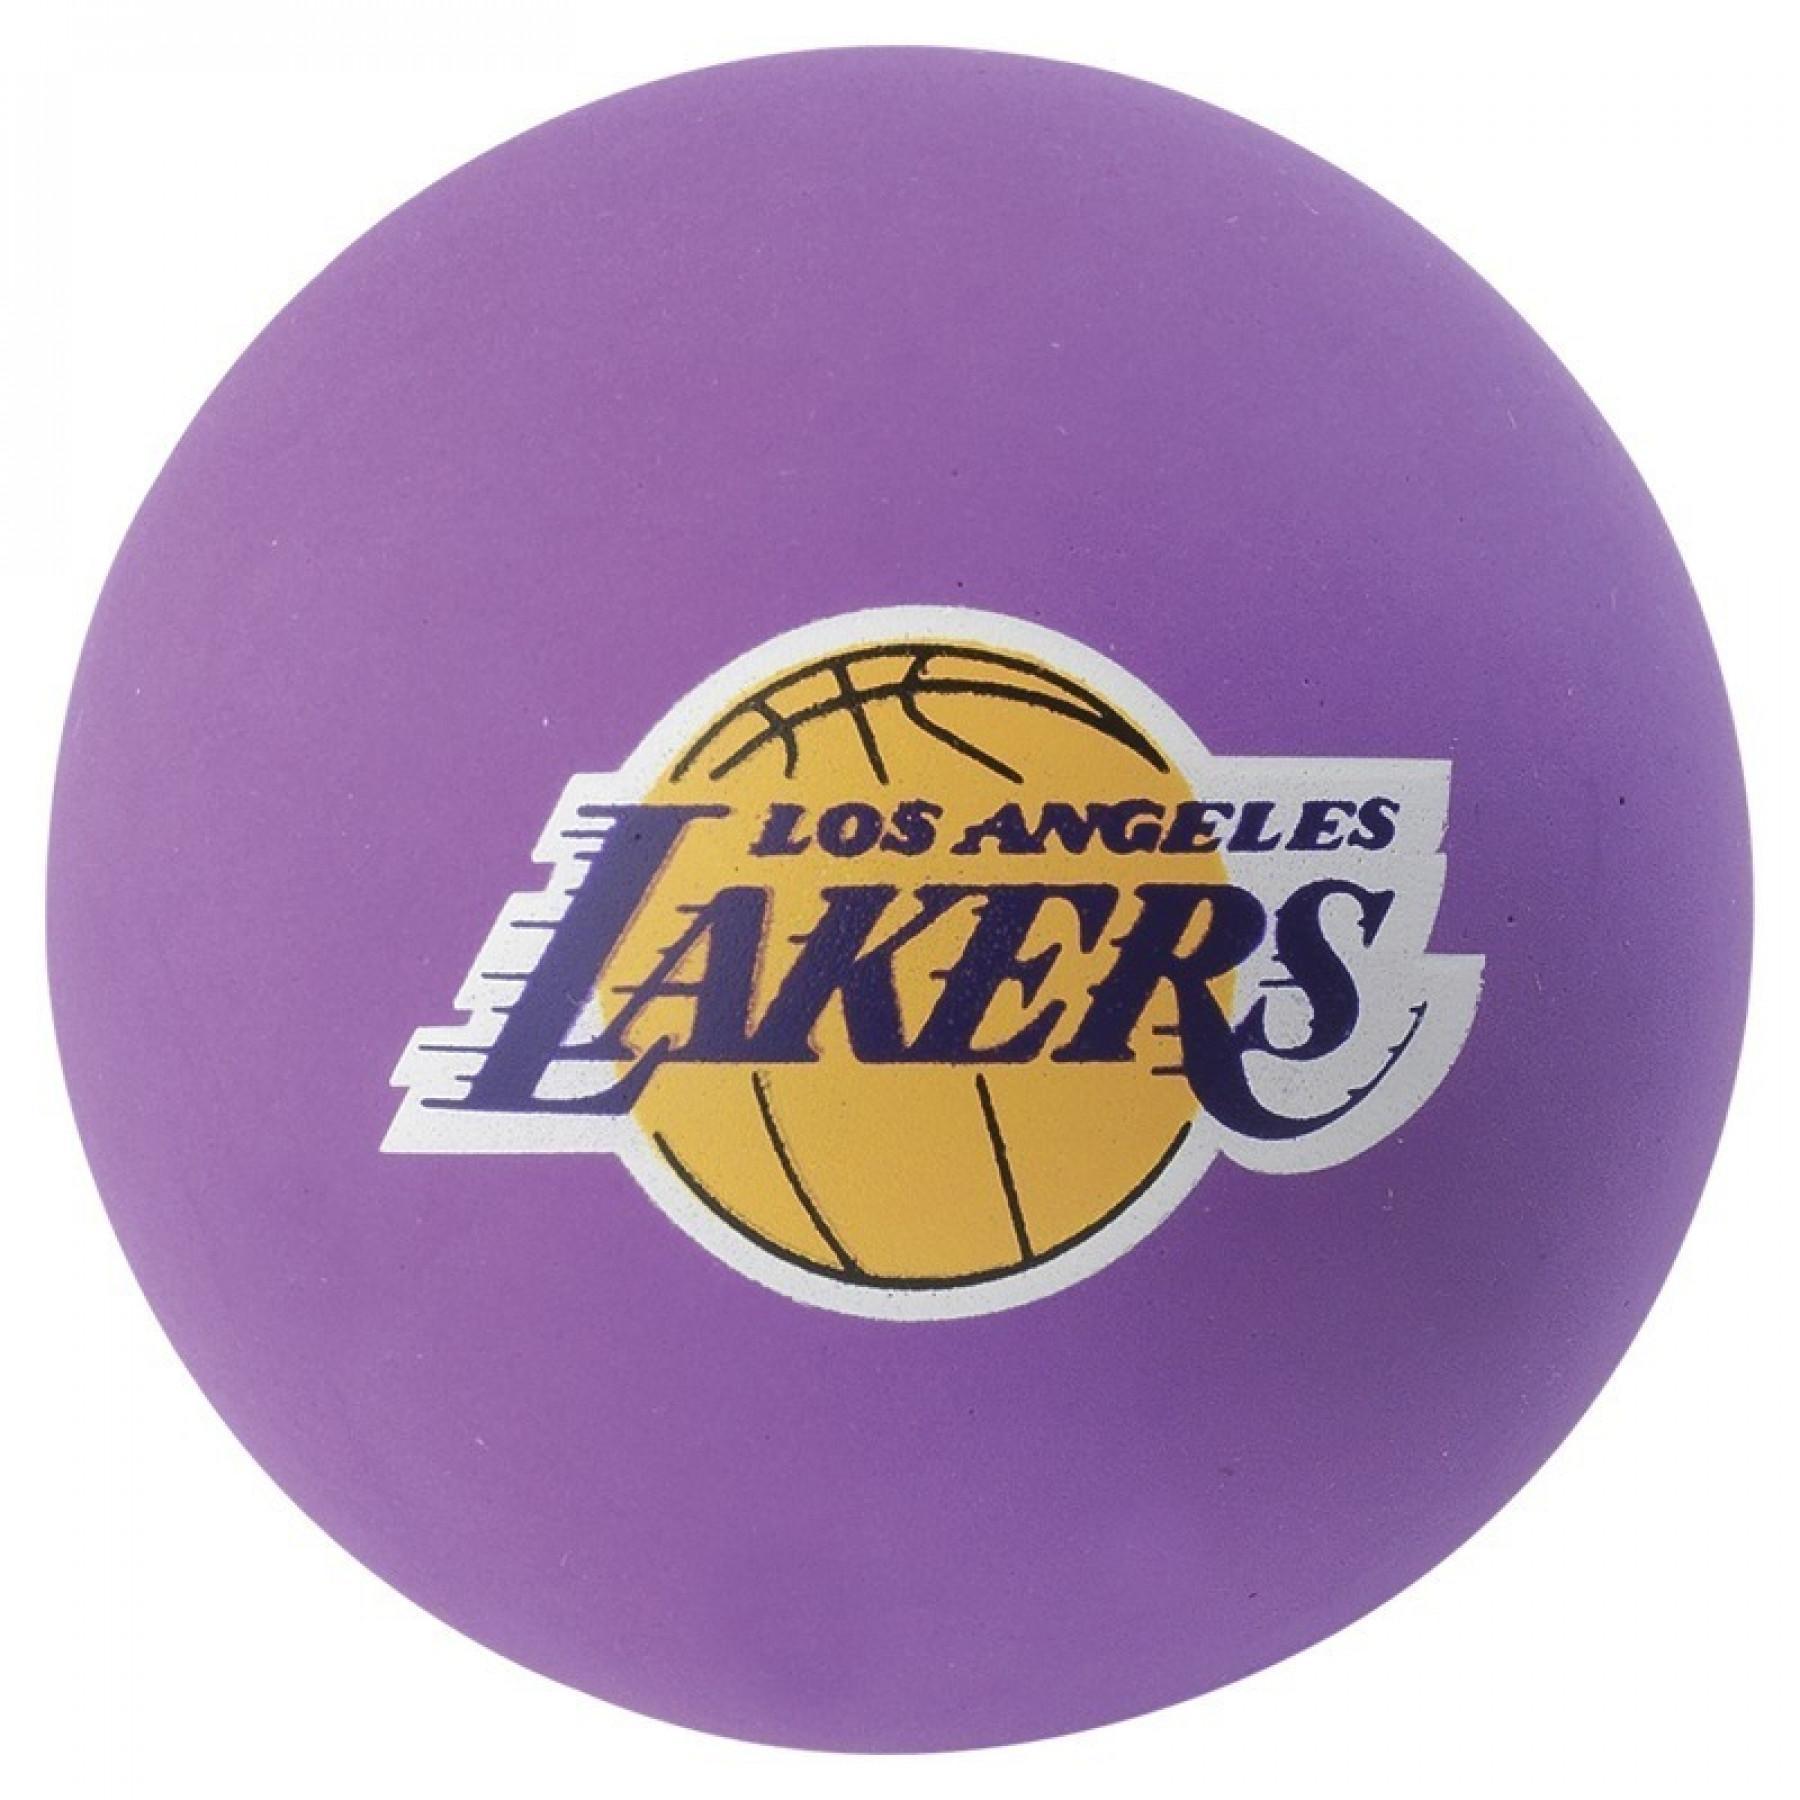 Mini piłka Spalding NBA Spaldeens LA Lakers